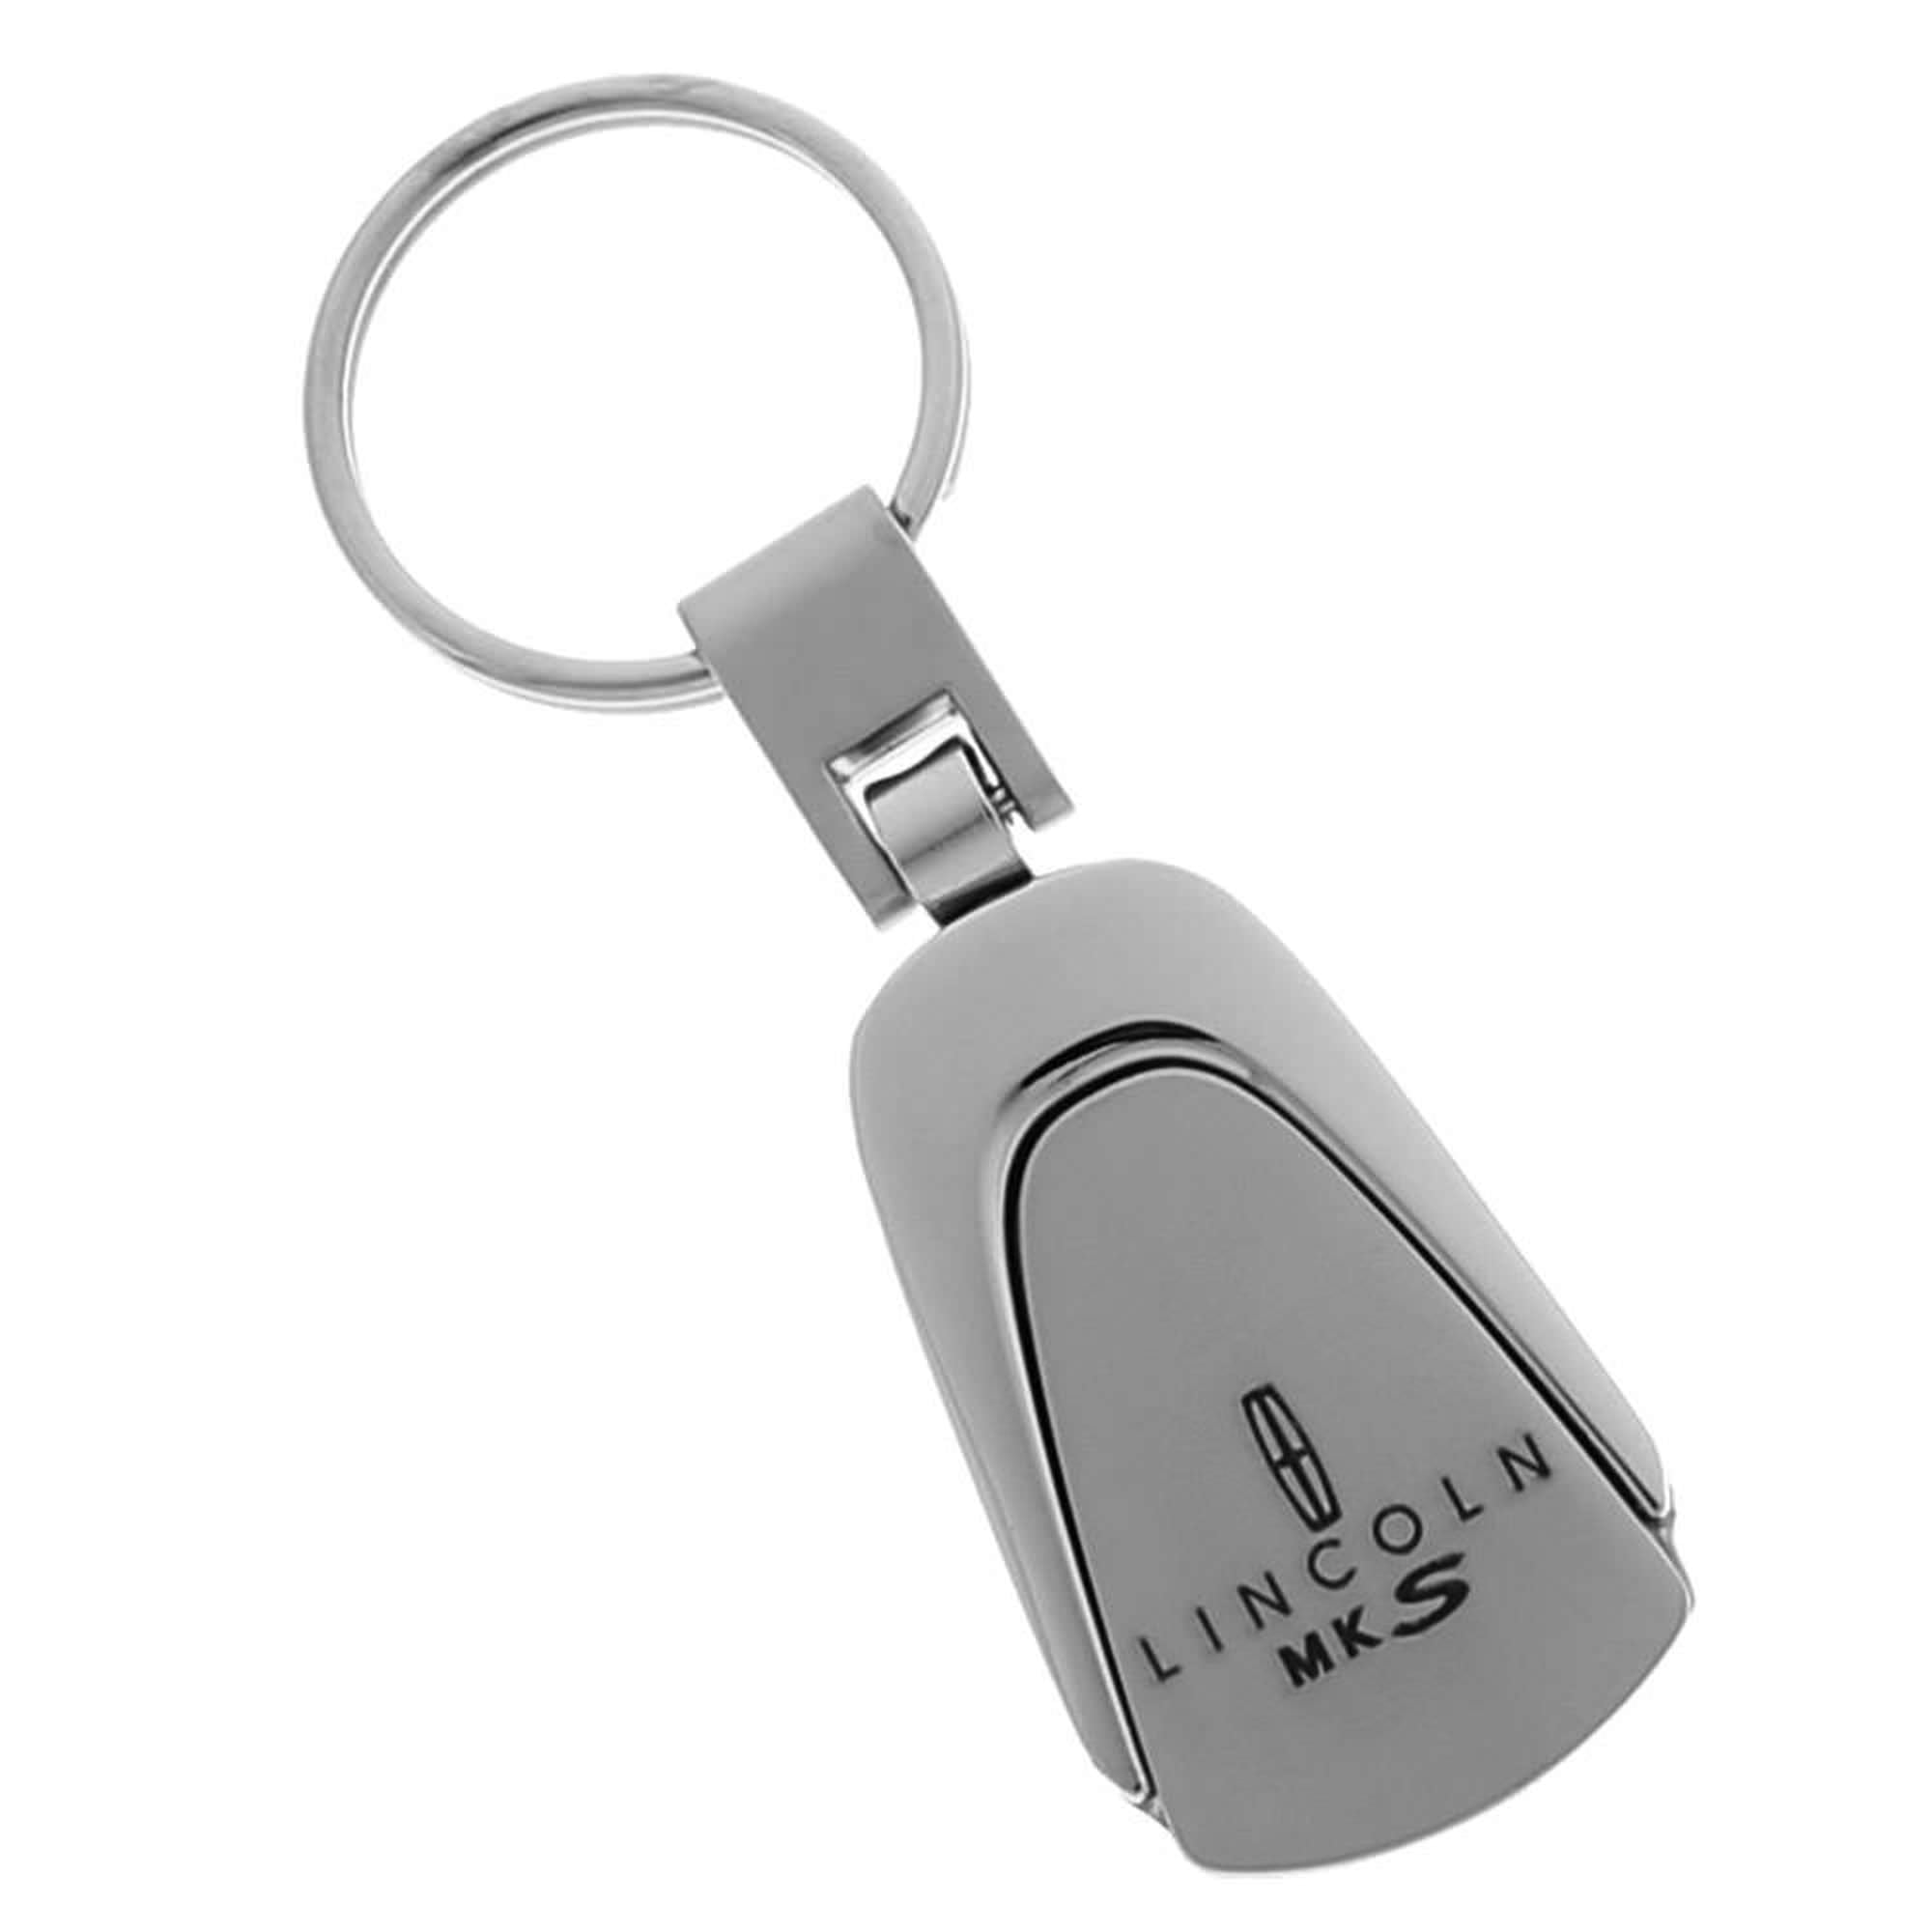 $5 Abraham Lincoln Keychain Key Chain 